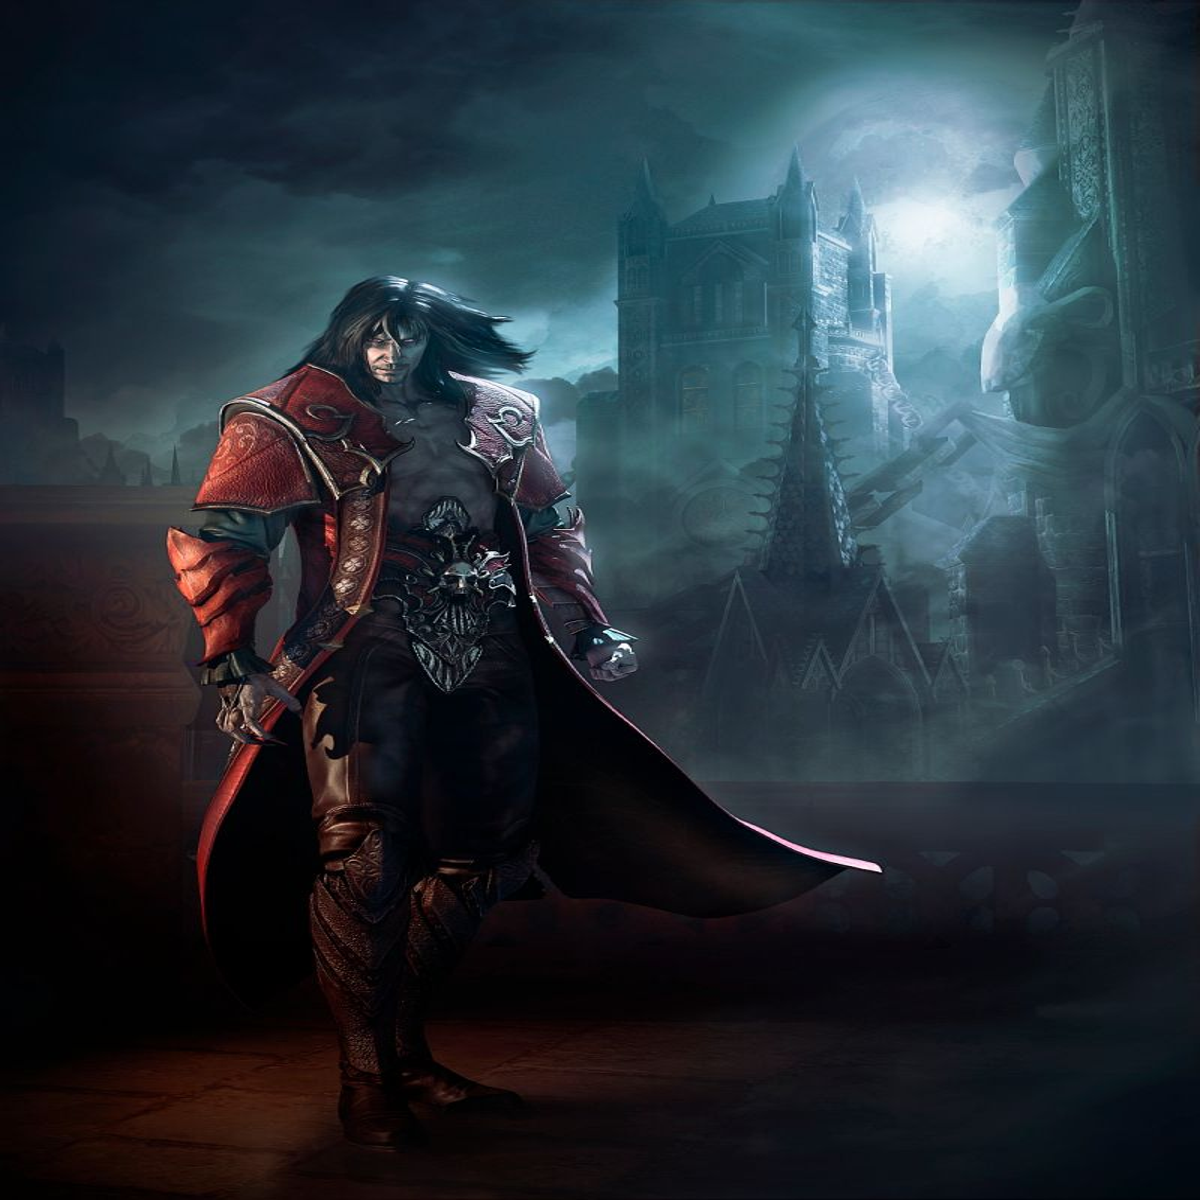 Castlevania: Lords of Shadow - Análise